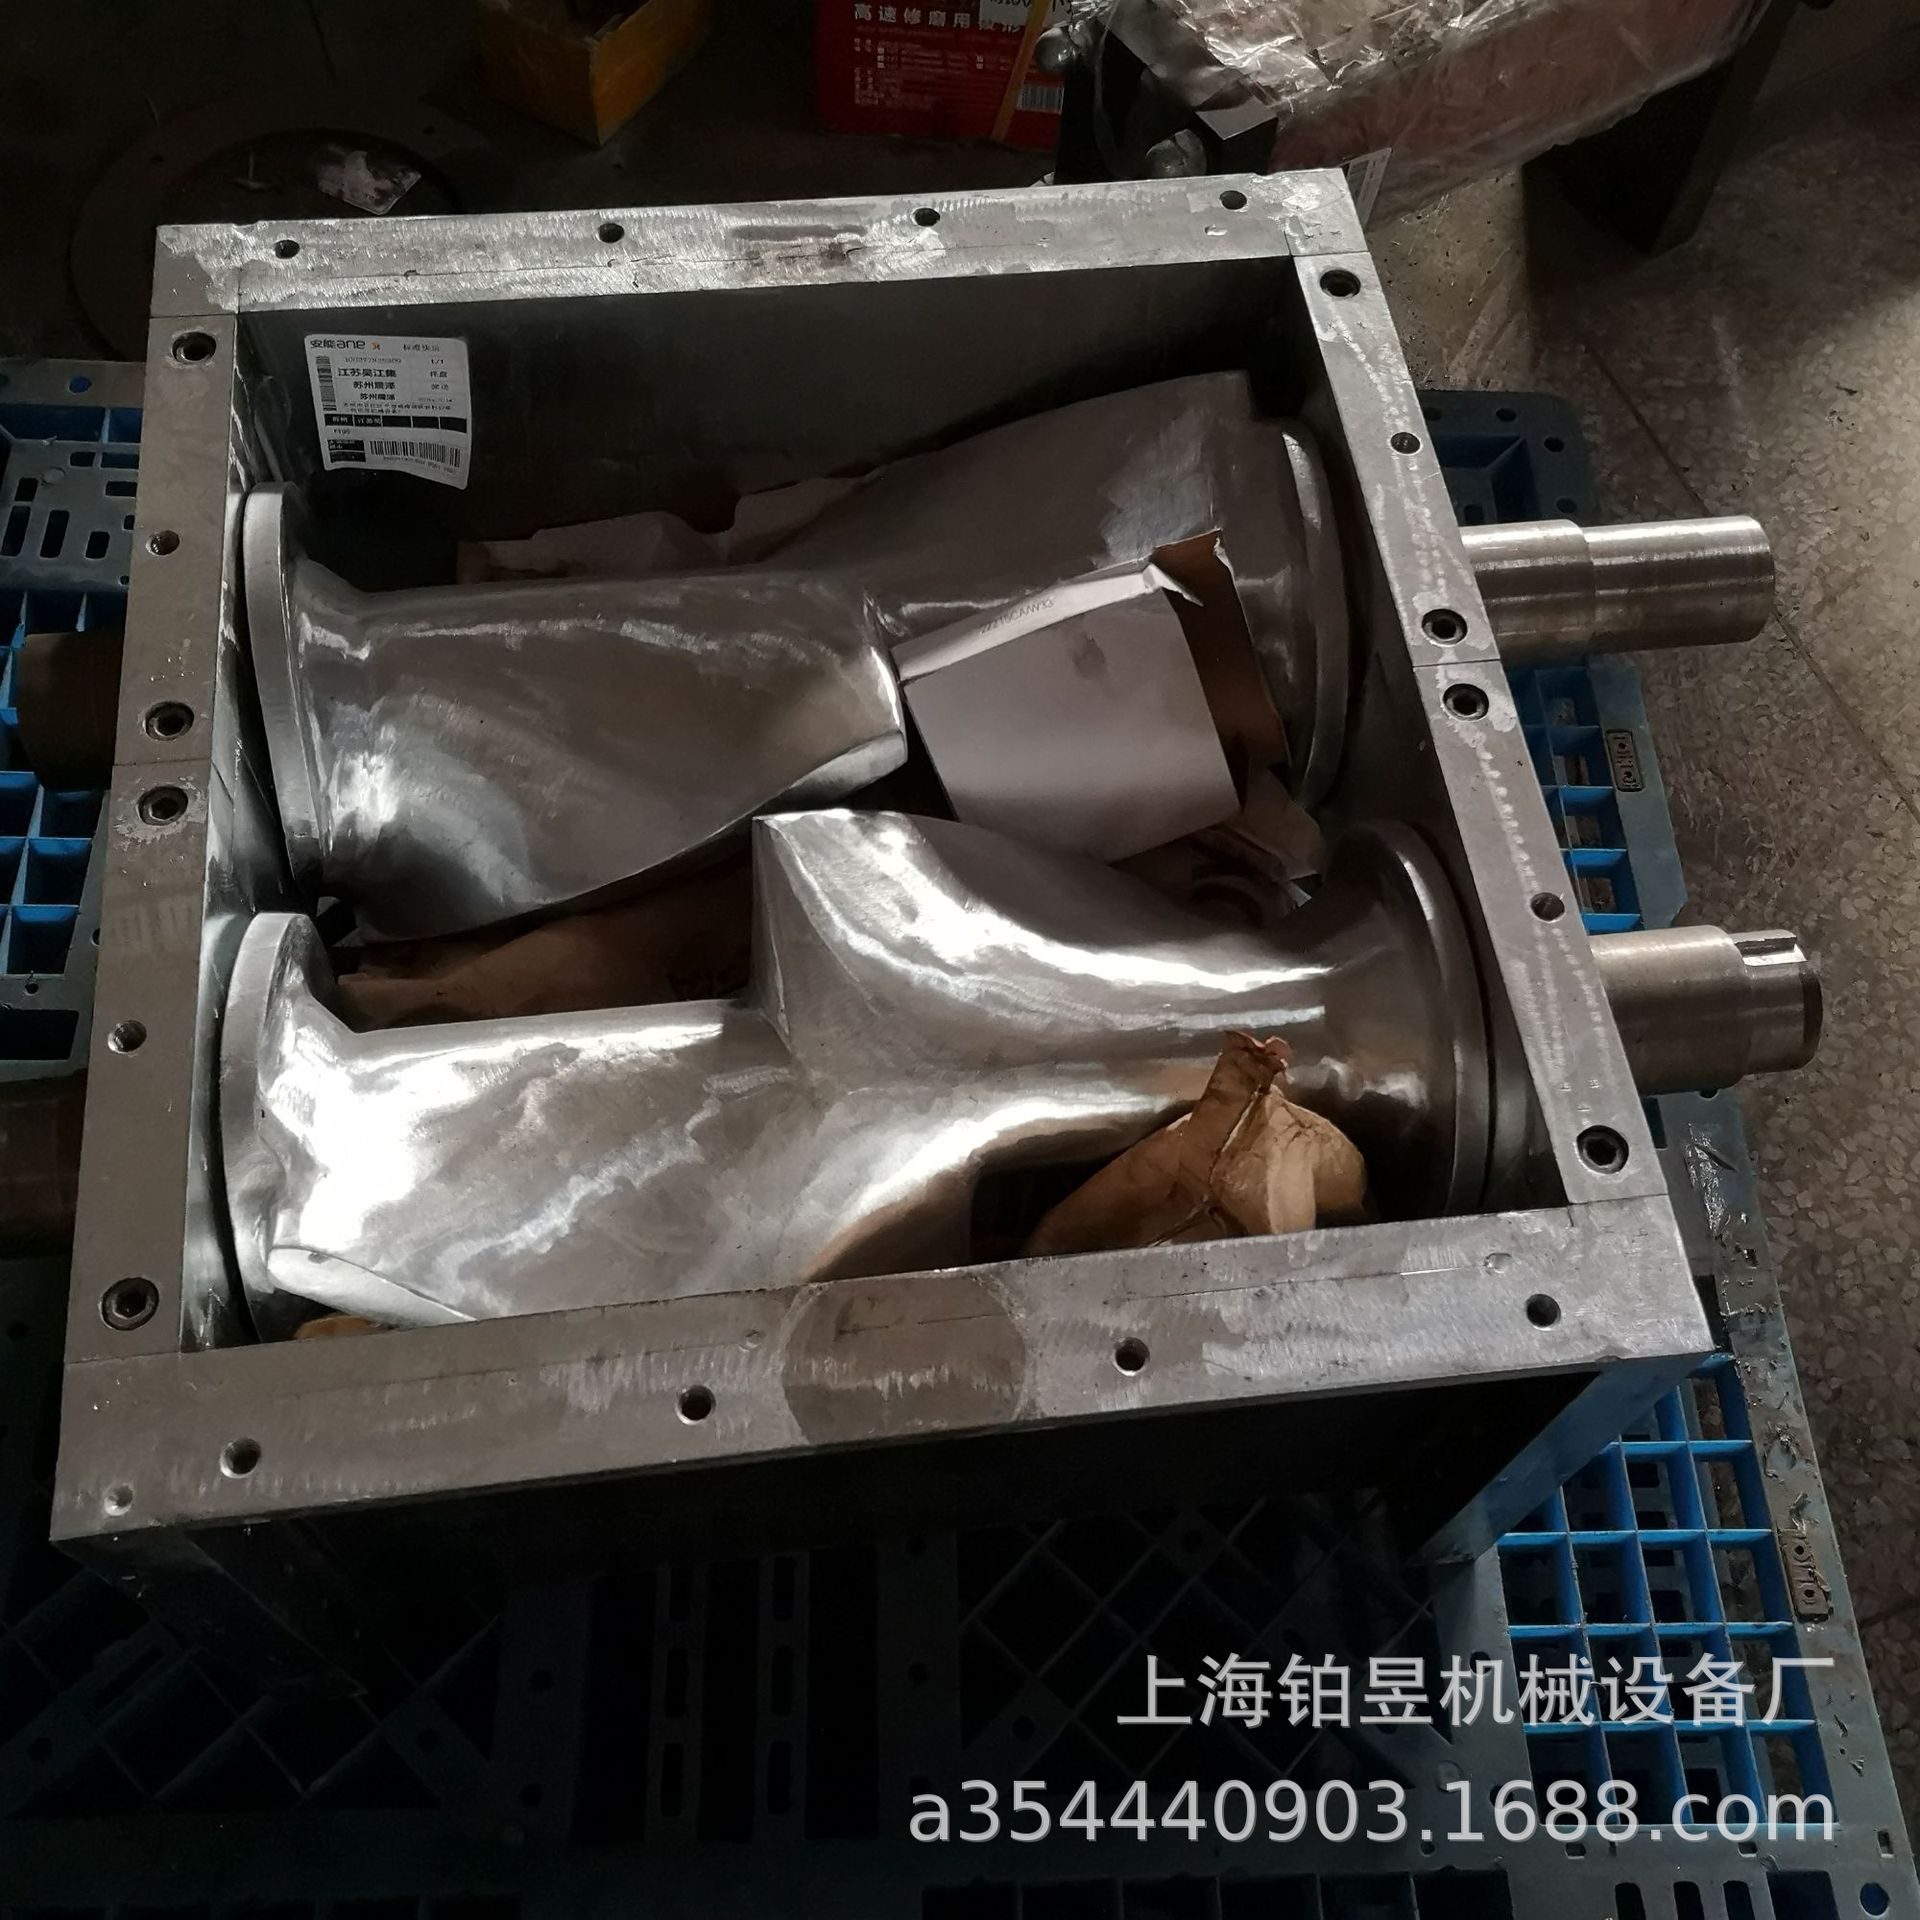 [Manufacturing Shanghai Factory sales]Wrists Enforcement Single screw Squeeze Granulation equipment